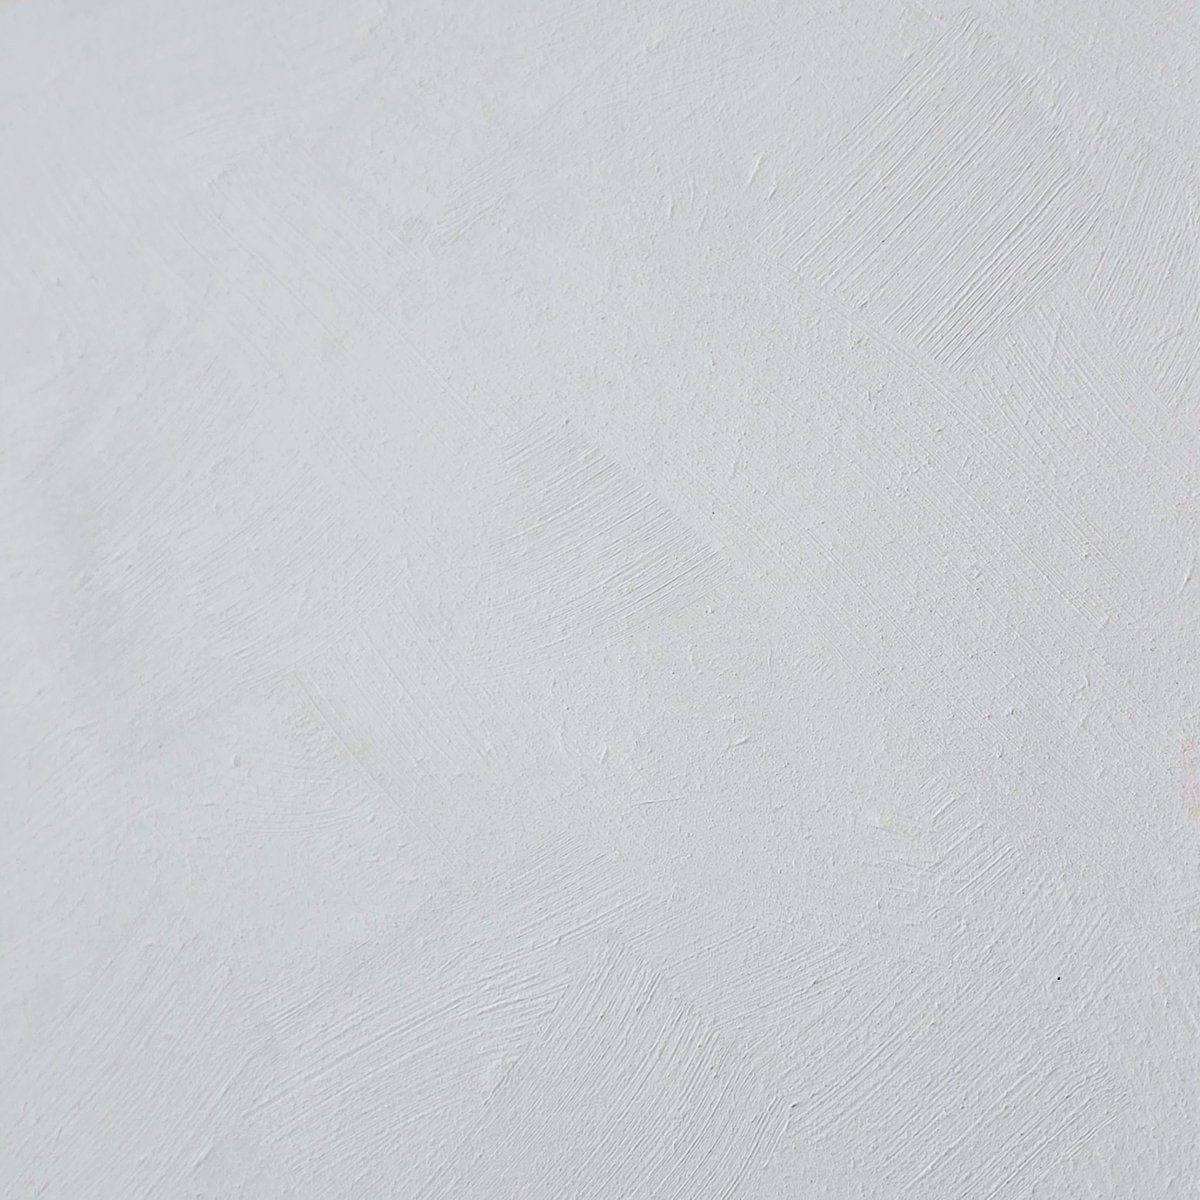 Bianca - White Limewash Wall Paint